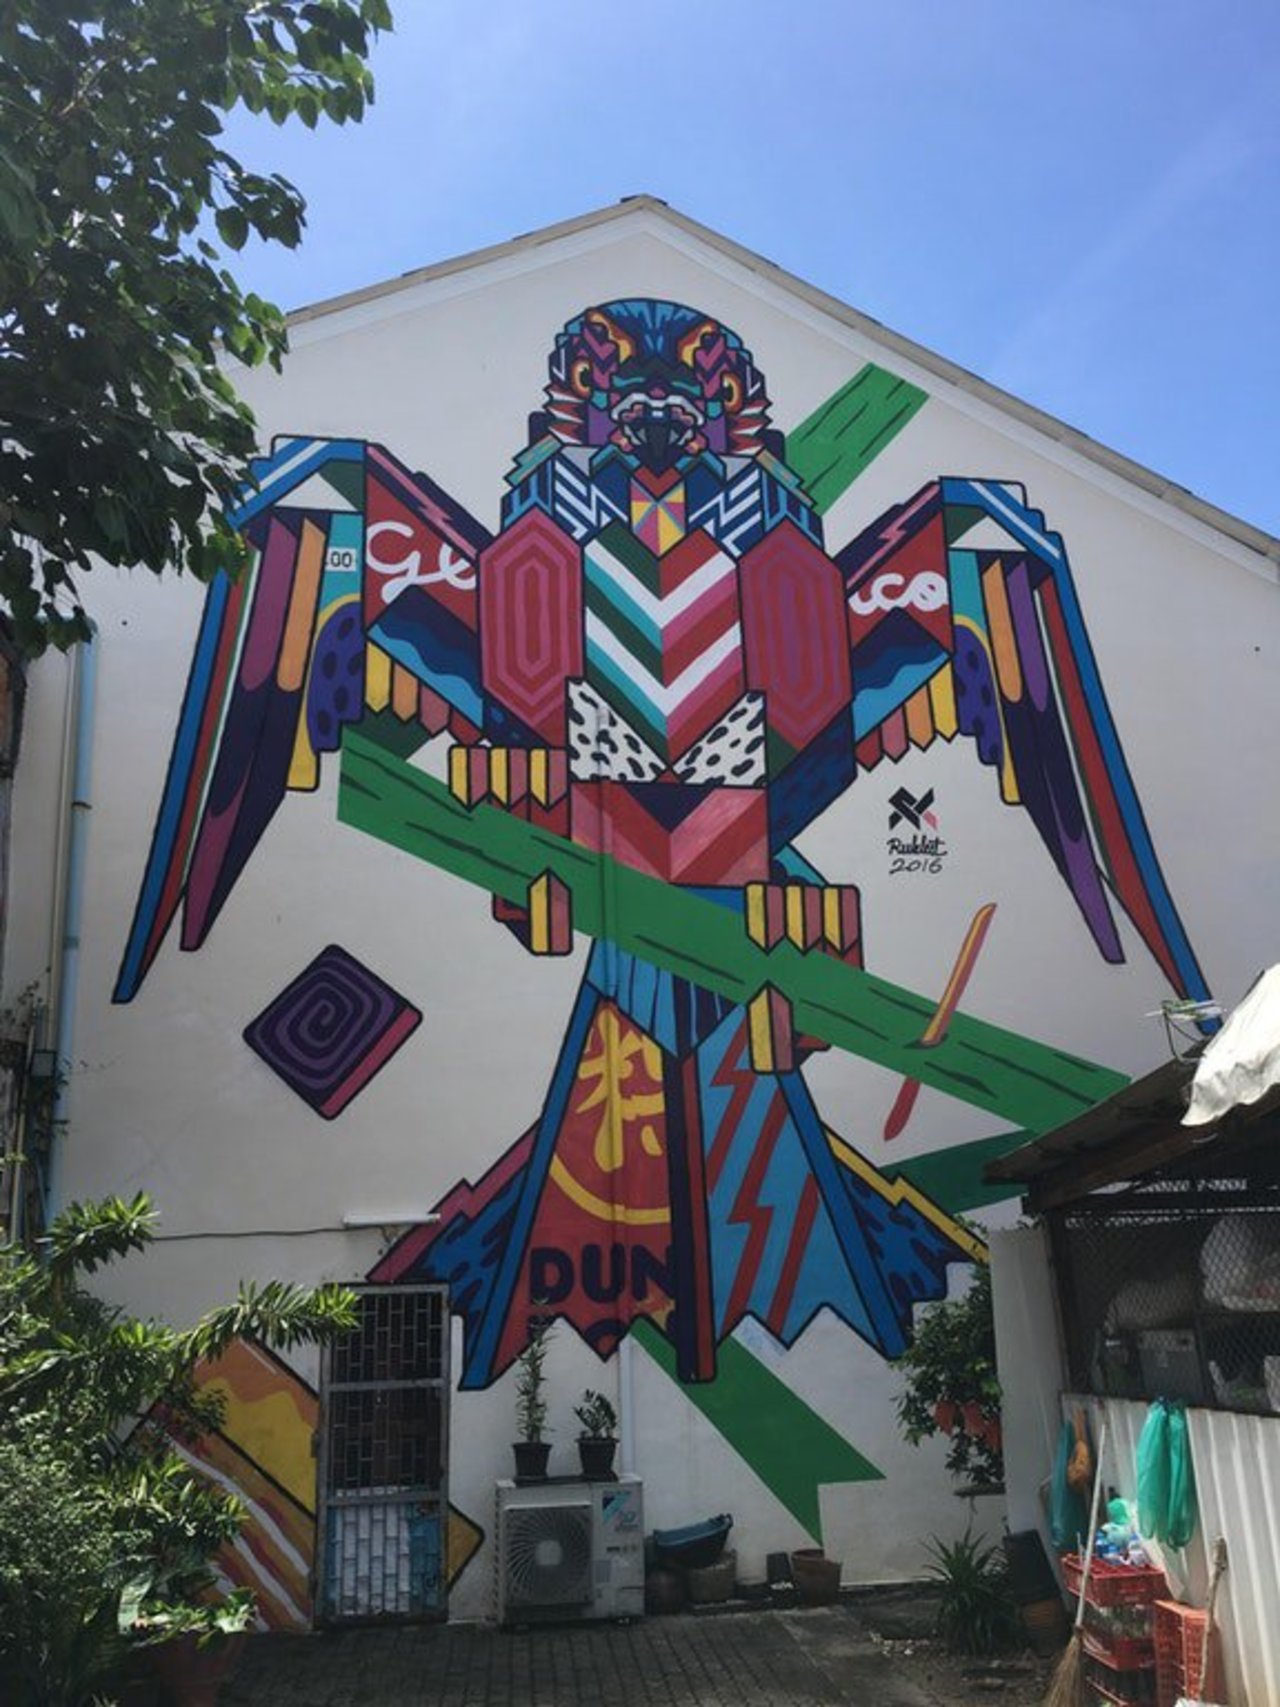 Unknown artist in Phuket Thailand#streetart #mural #graffiti #art https://t.co/BsvS6Ot9Vn